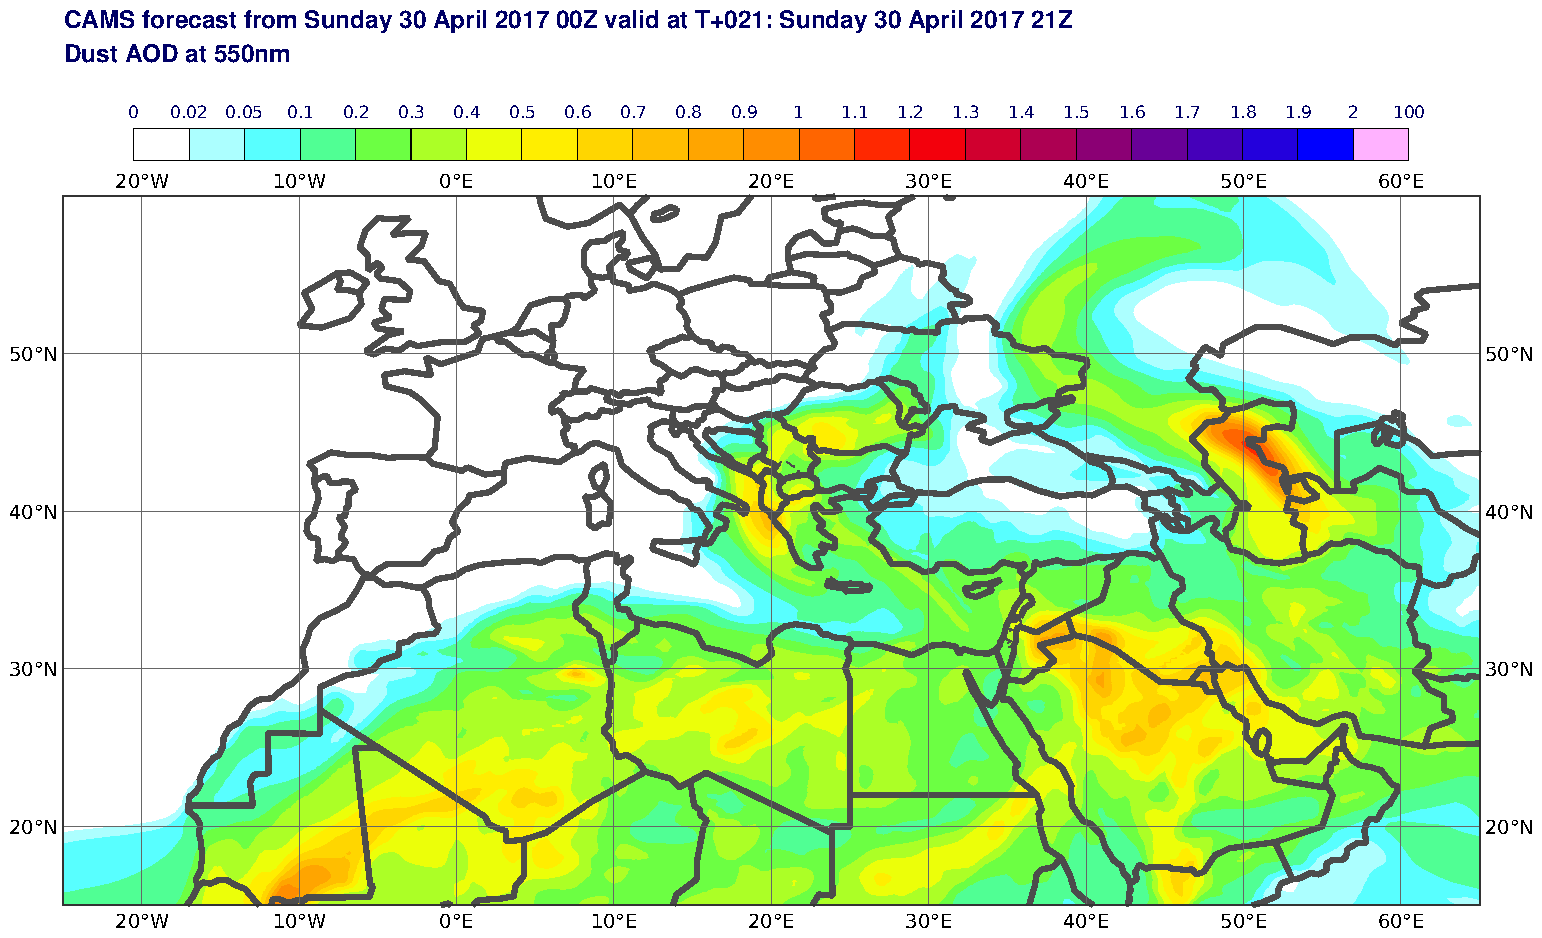 Dust AOD at 550nm valid at T21 - 2017-04-30 21:00